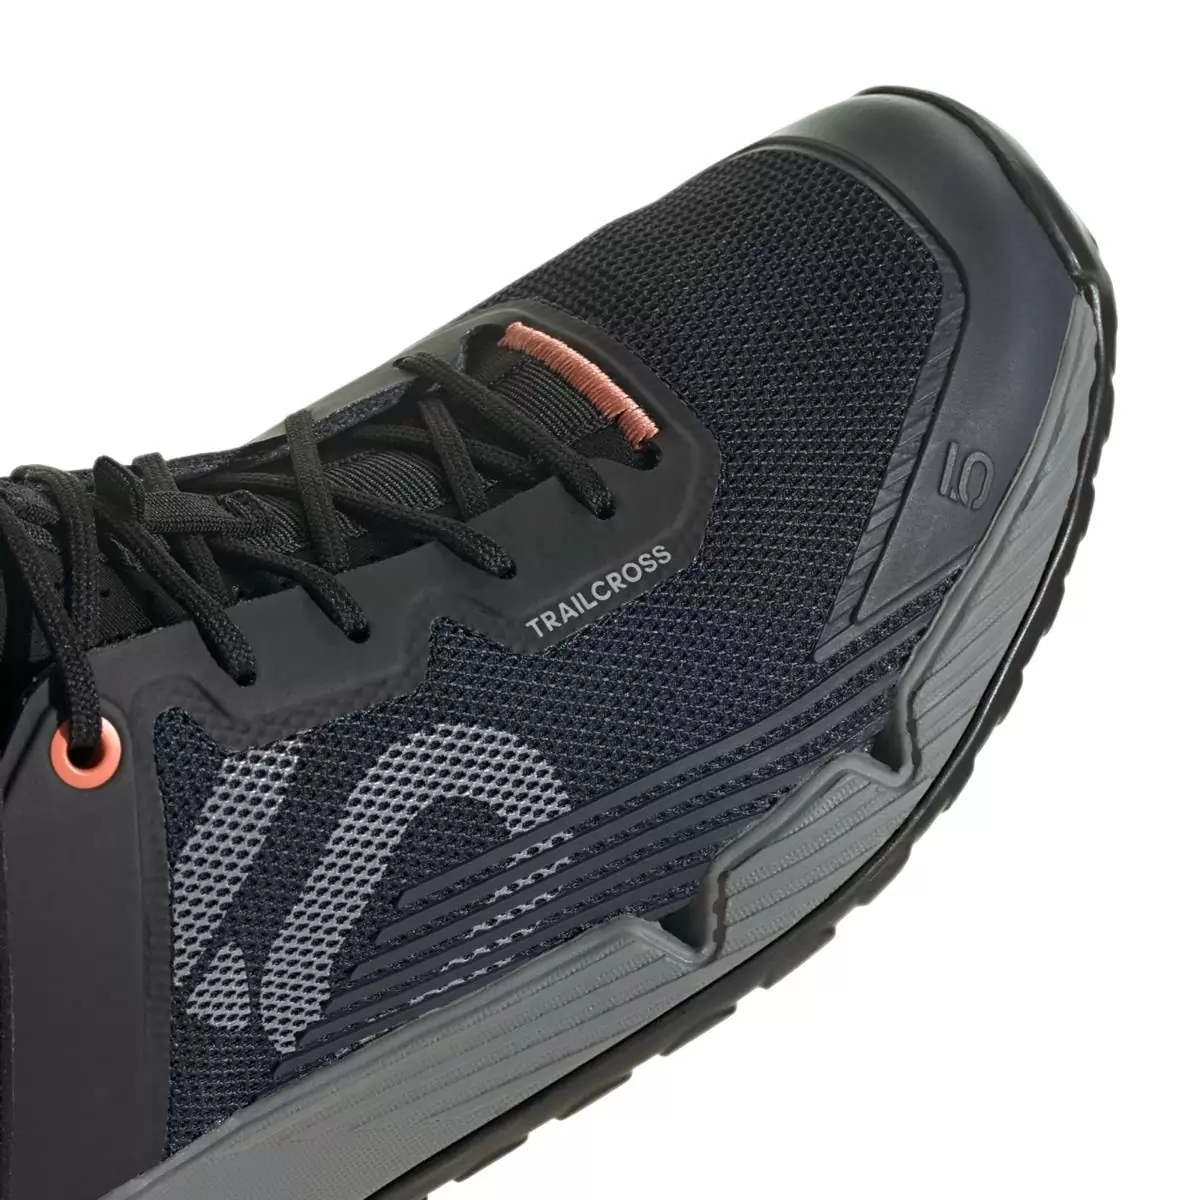 Flat 5.10 Trailcross Mid Pro MTB Shoes Black/Grey Size 42 #6